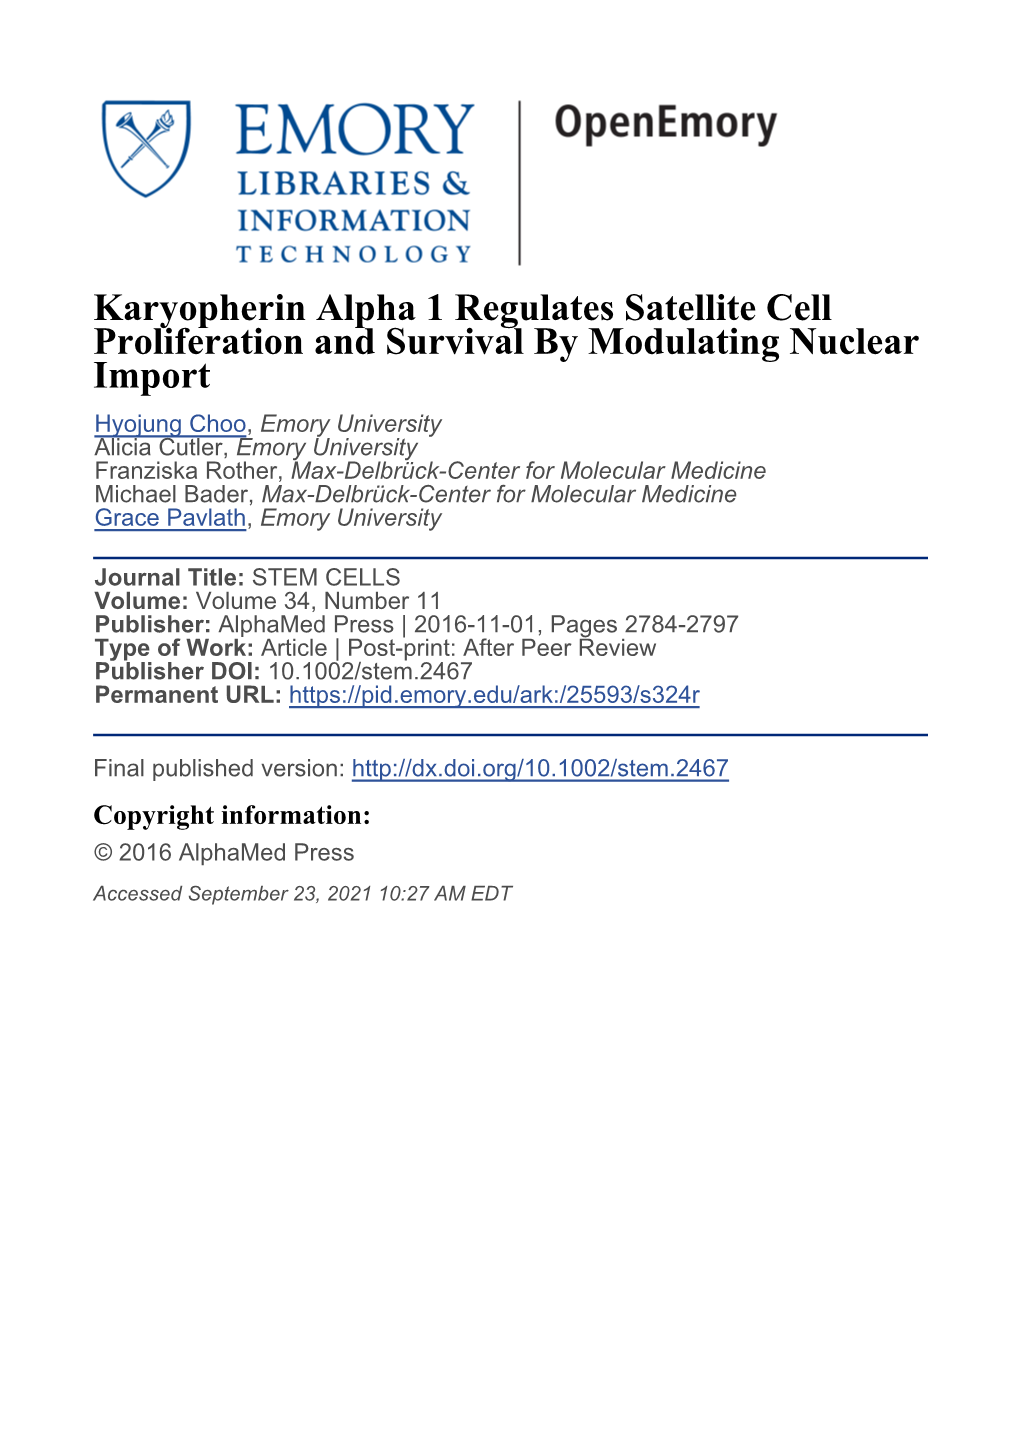 Karyopherin Alpha 1 Regulates Satellite Cell Proliferation And